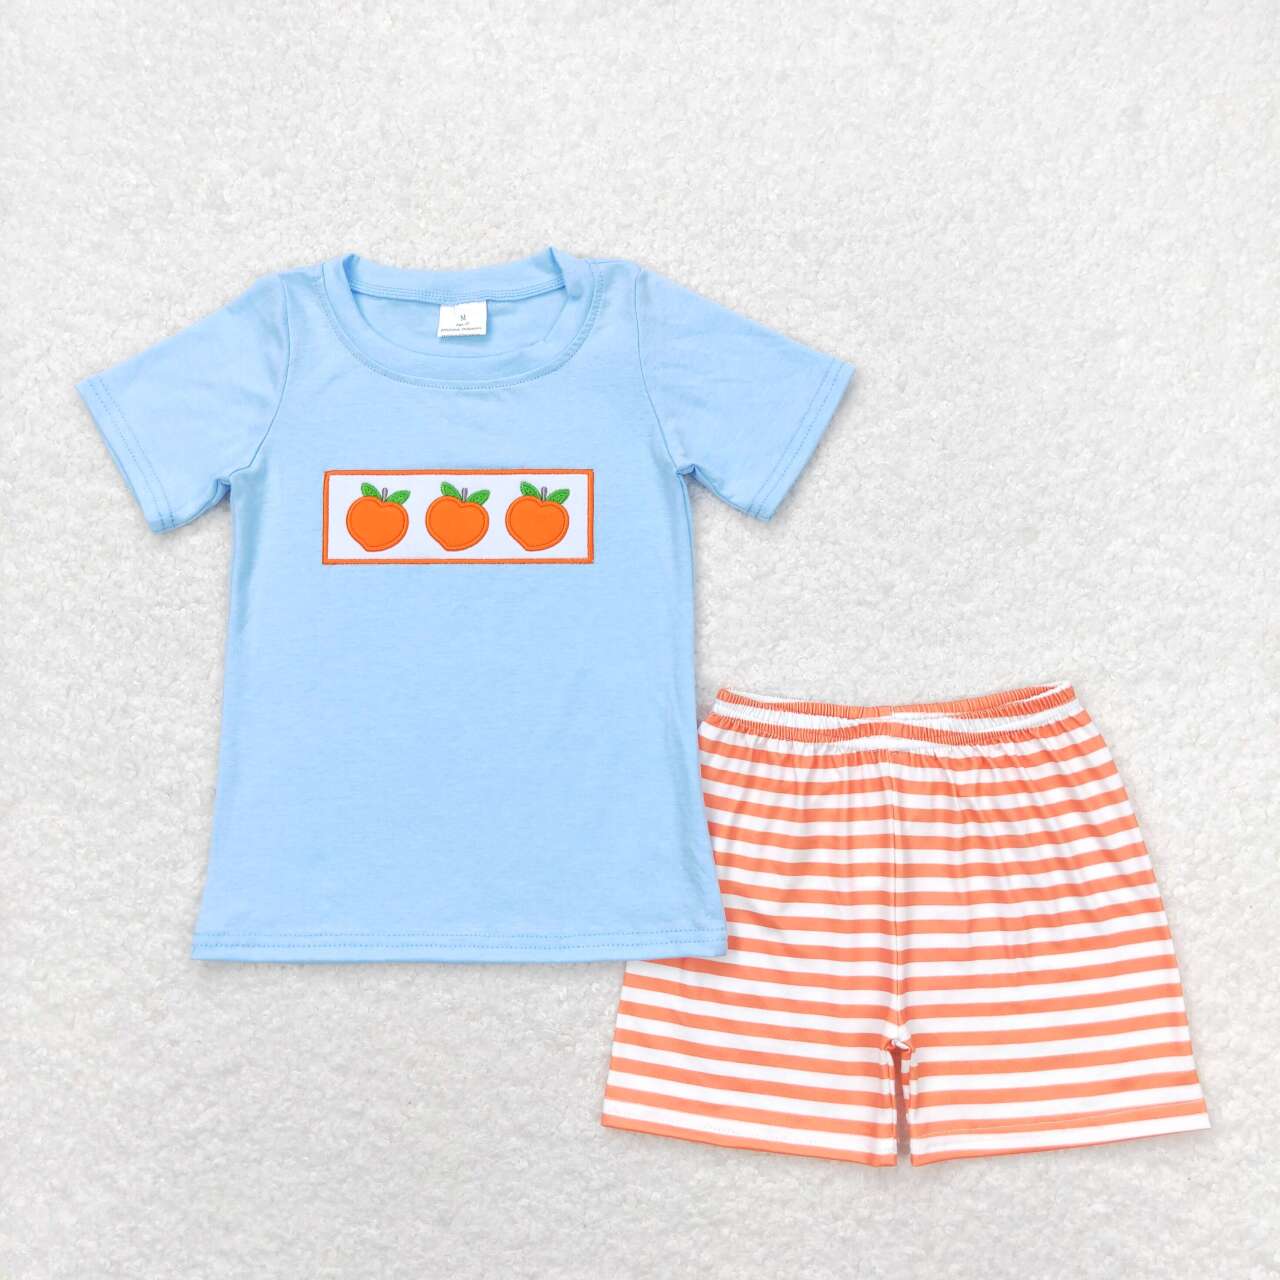 peach embroidery stripe boys shorts set summer clothing